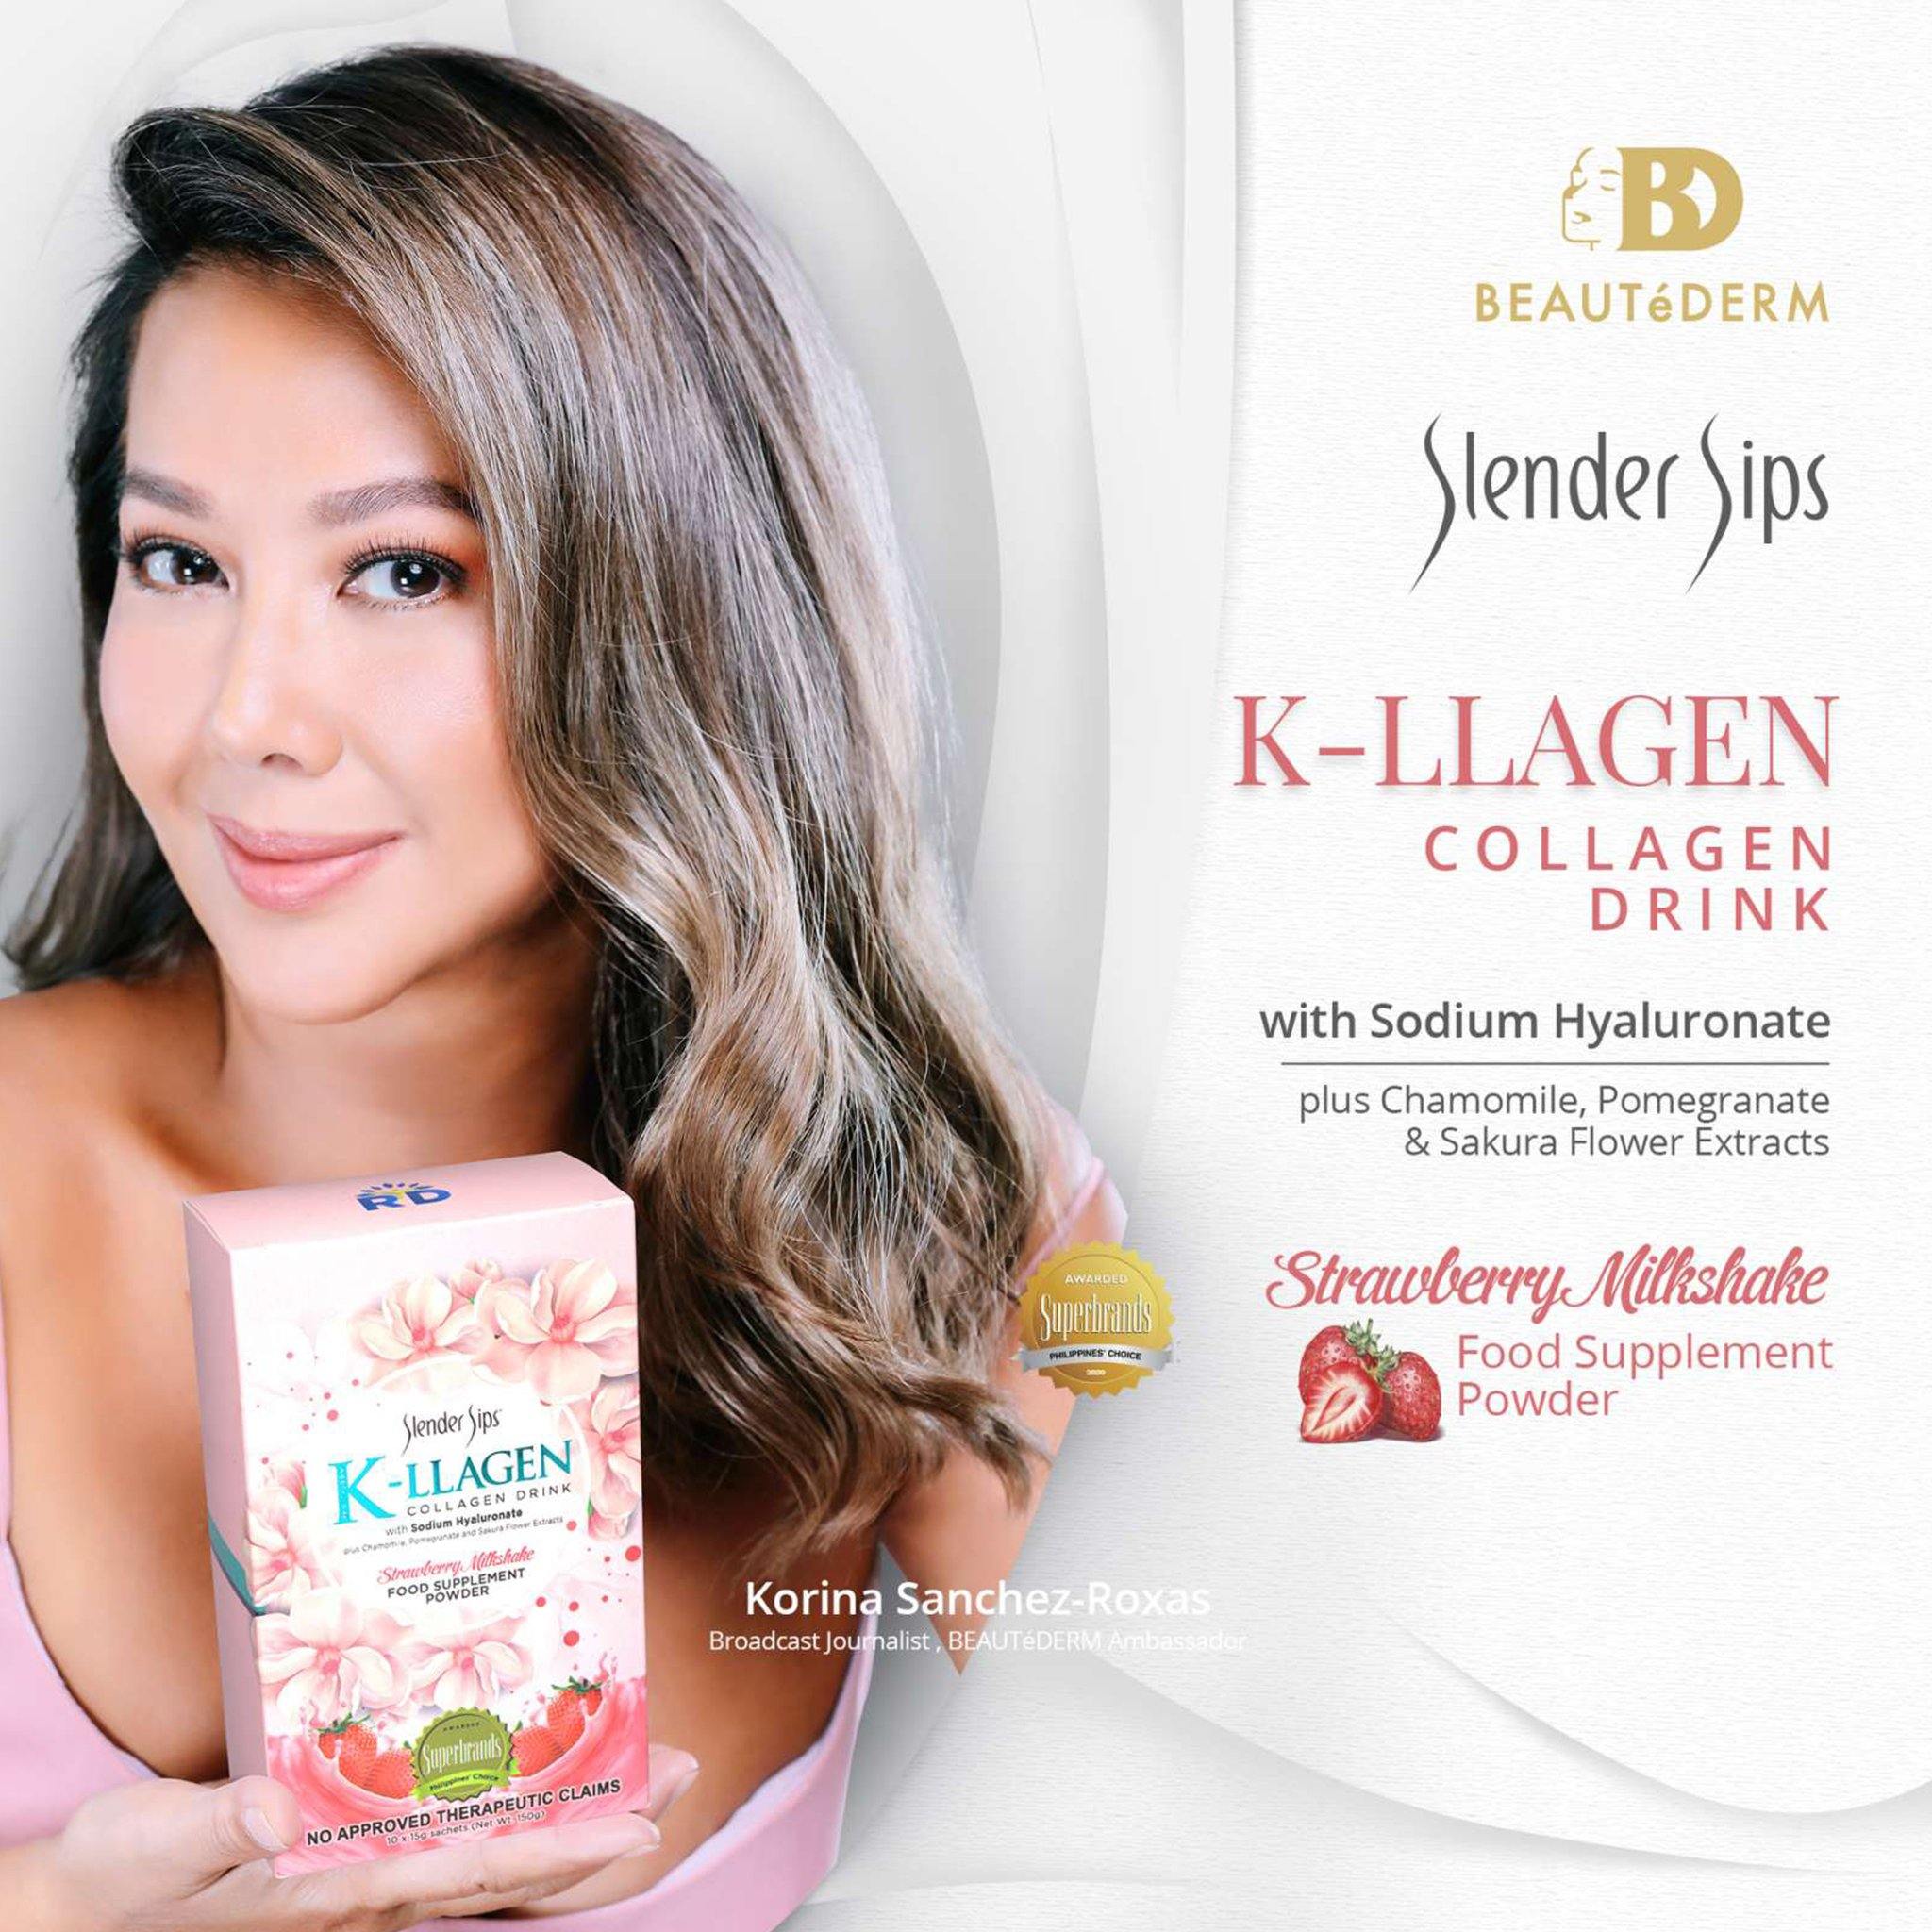 Slender Sips, K-llagen Collagen Drink with Sodium Hyaluronate, 10 sachets, by Beautederm, with Korina Sanchez-Roxas (Beautederm Ambassador)